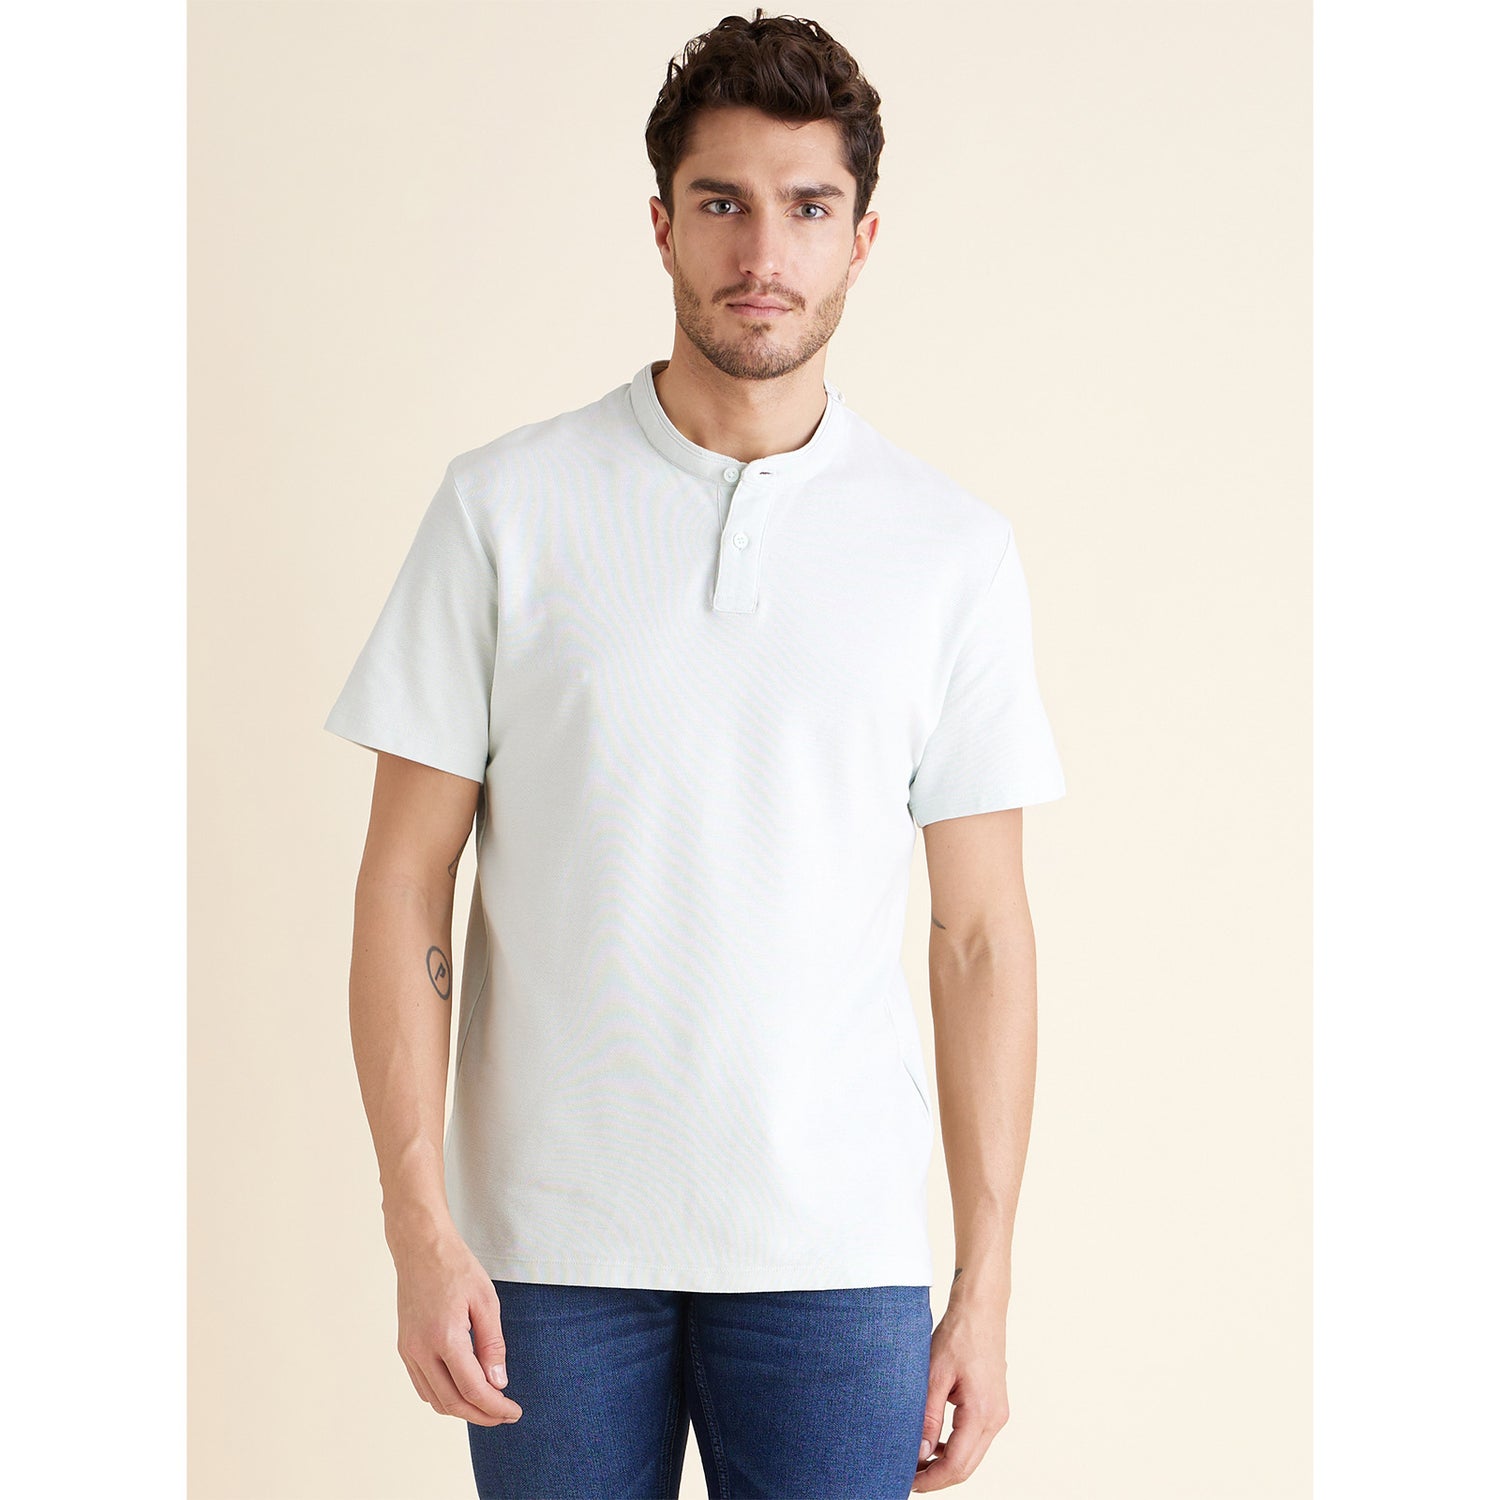 Men Solid White Short Sleeve T-shirt (Various Sizes)